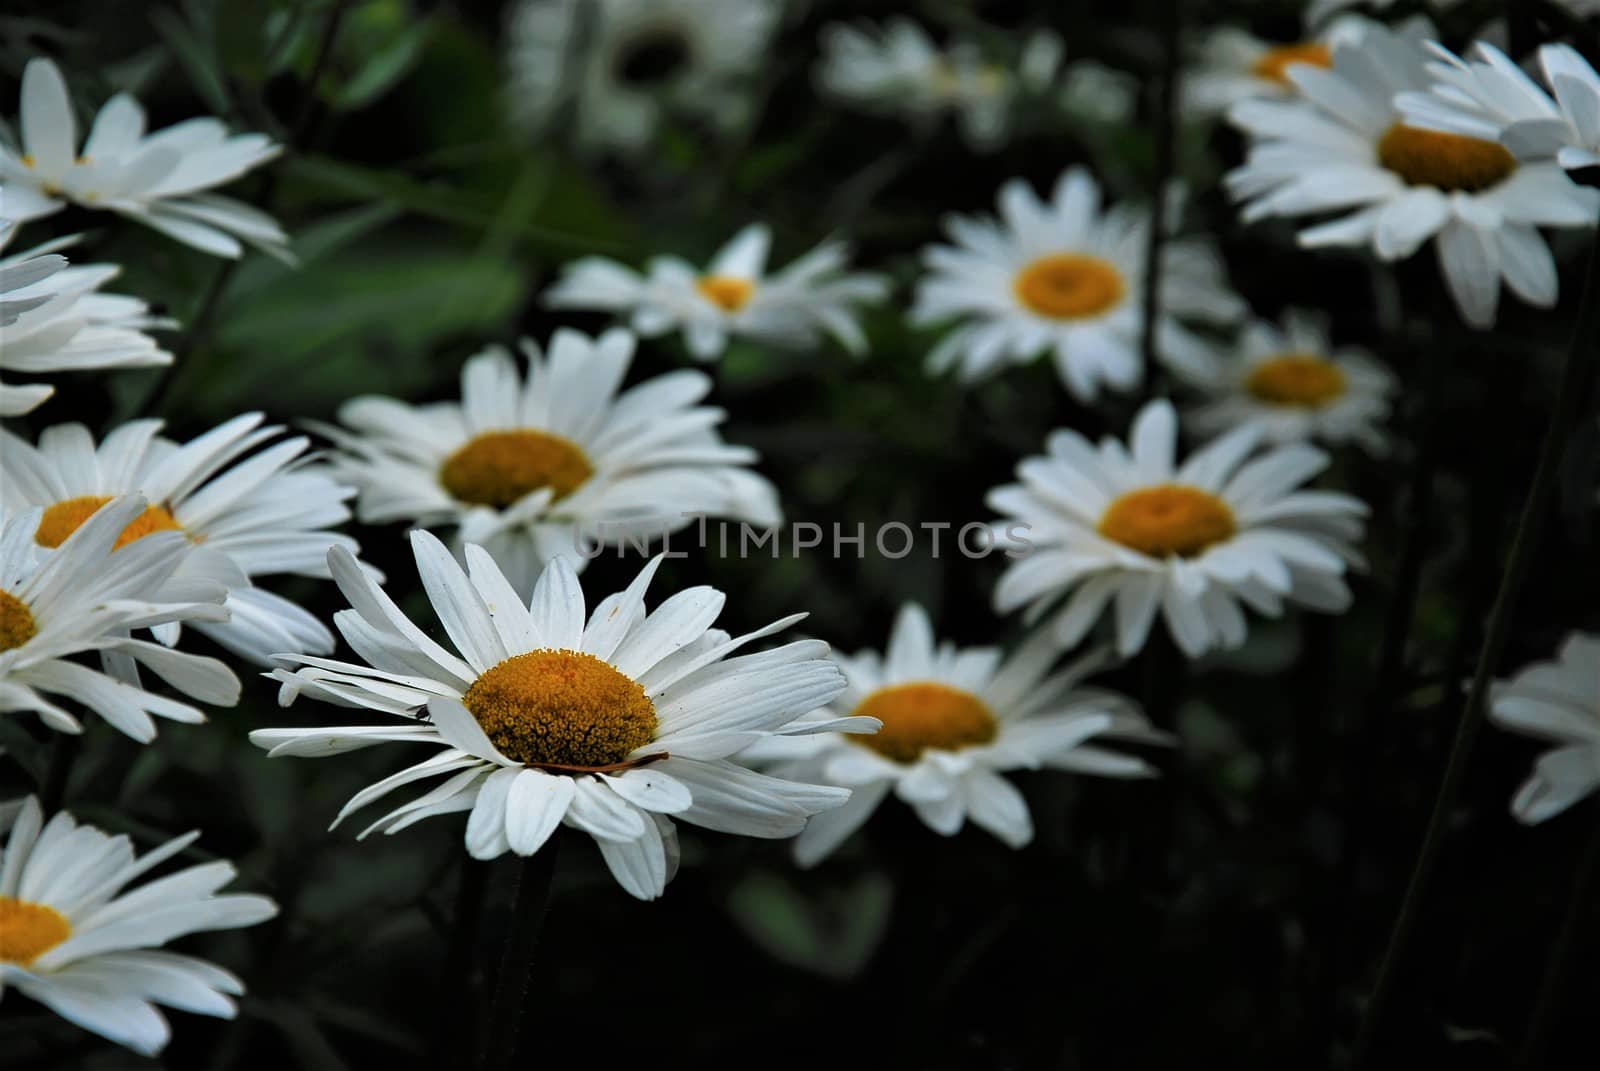 Leucanthemum - daisies in the flower bed